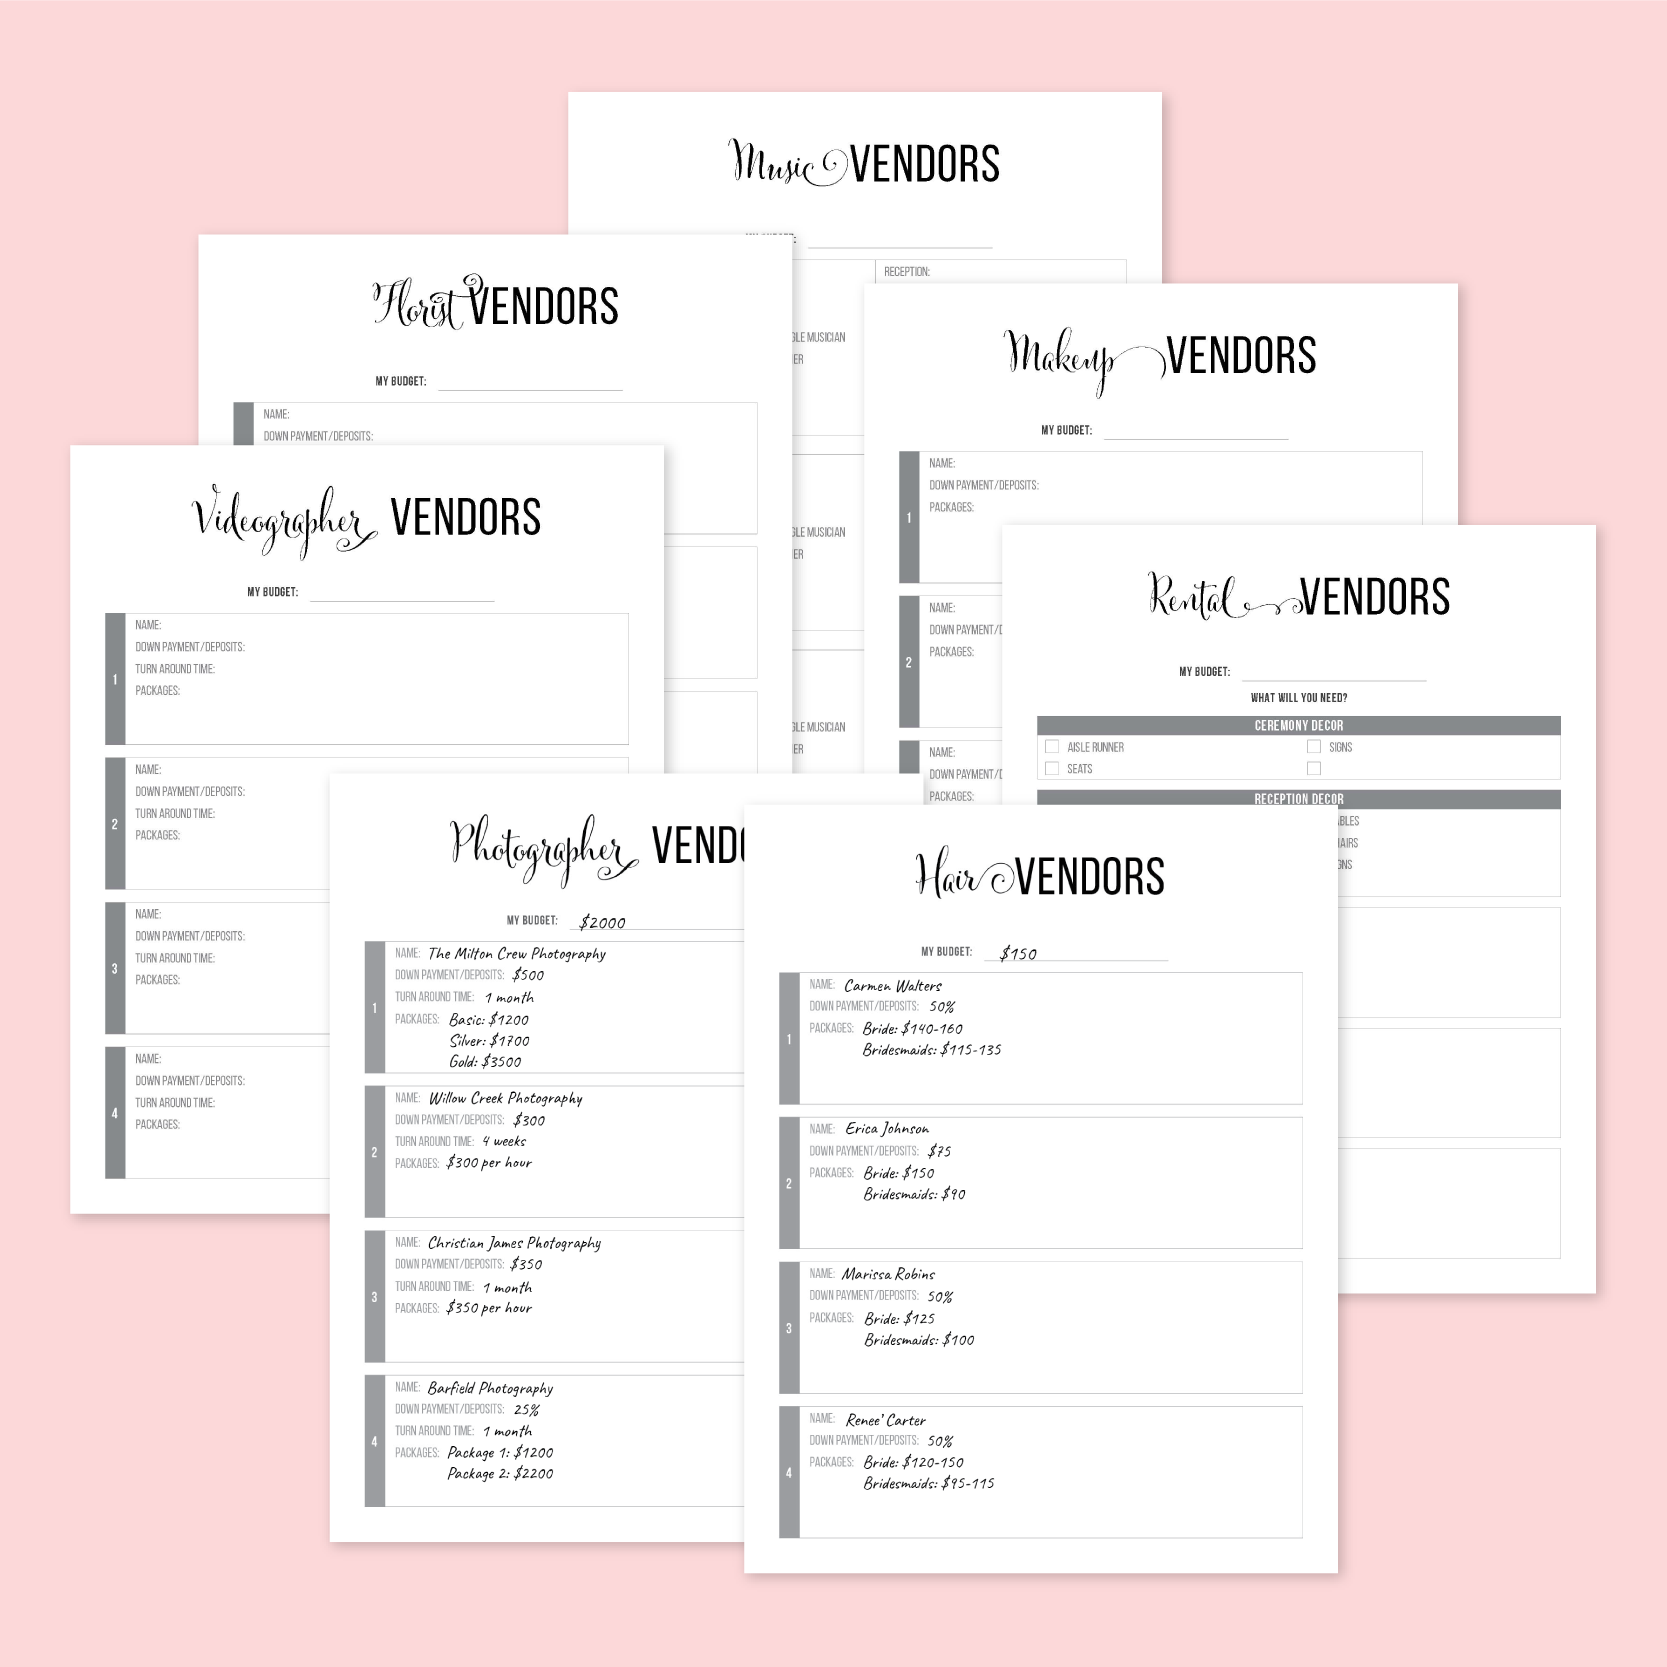 Downloadable Wedding Planner Printable Planner Kit Planning